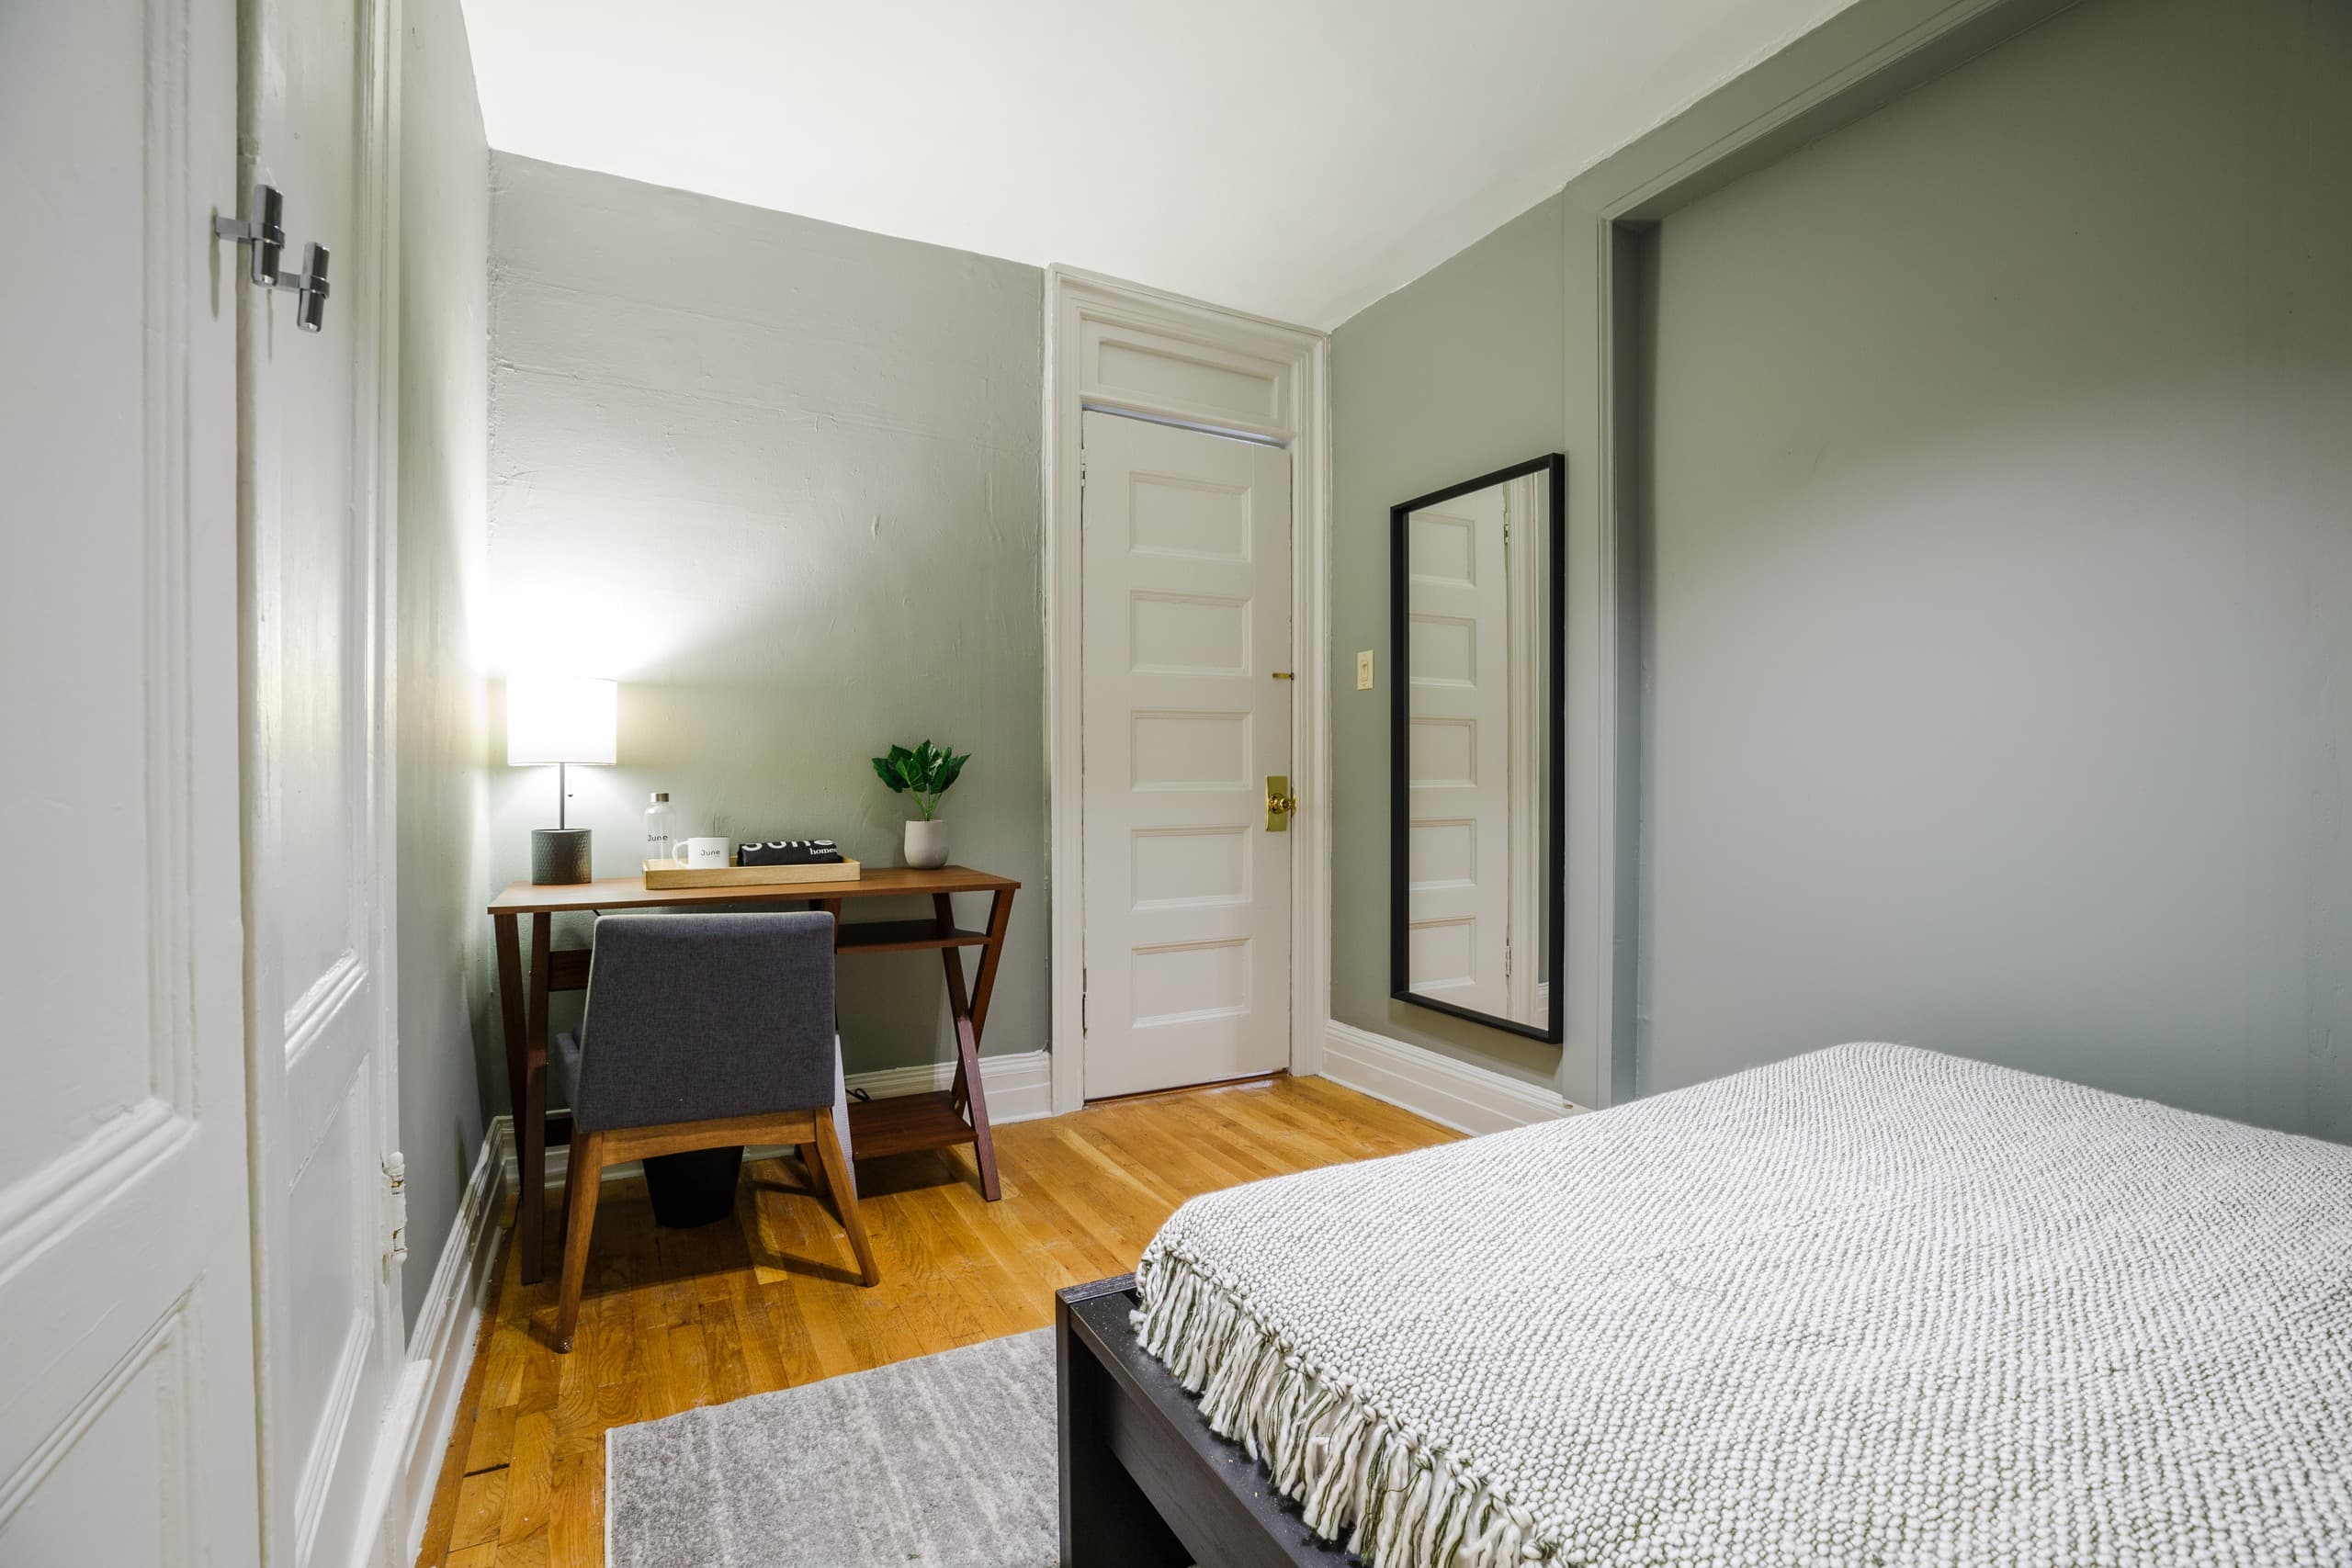 Photo 9 of #495: Full Bedroom B at June Homes